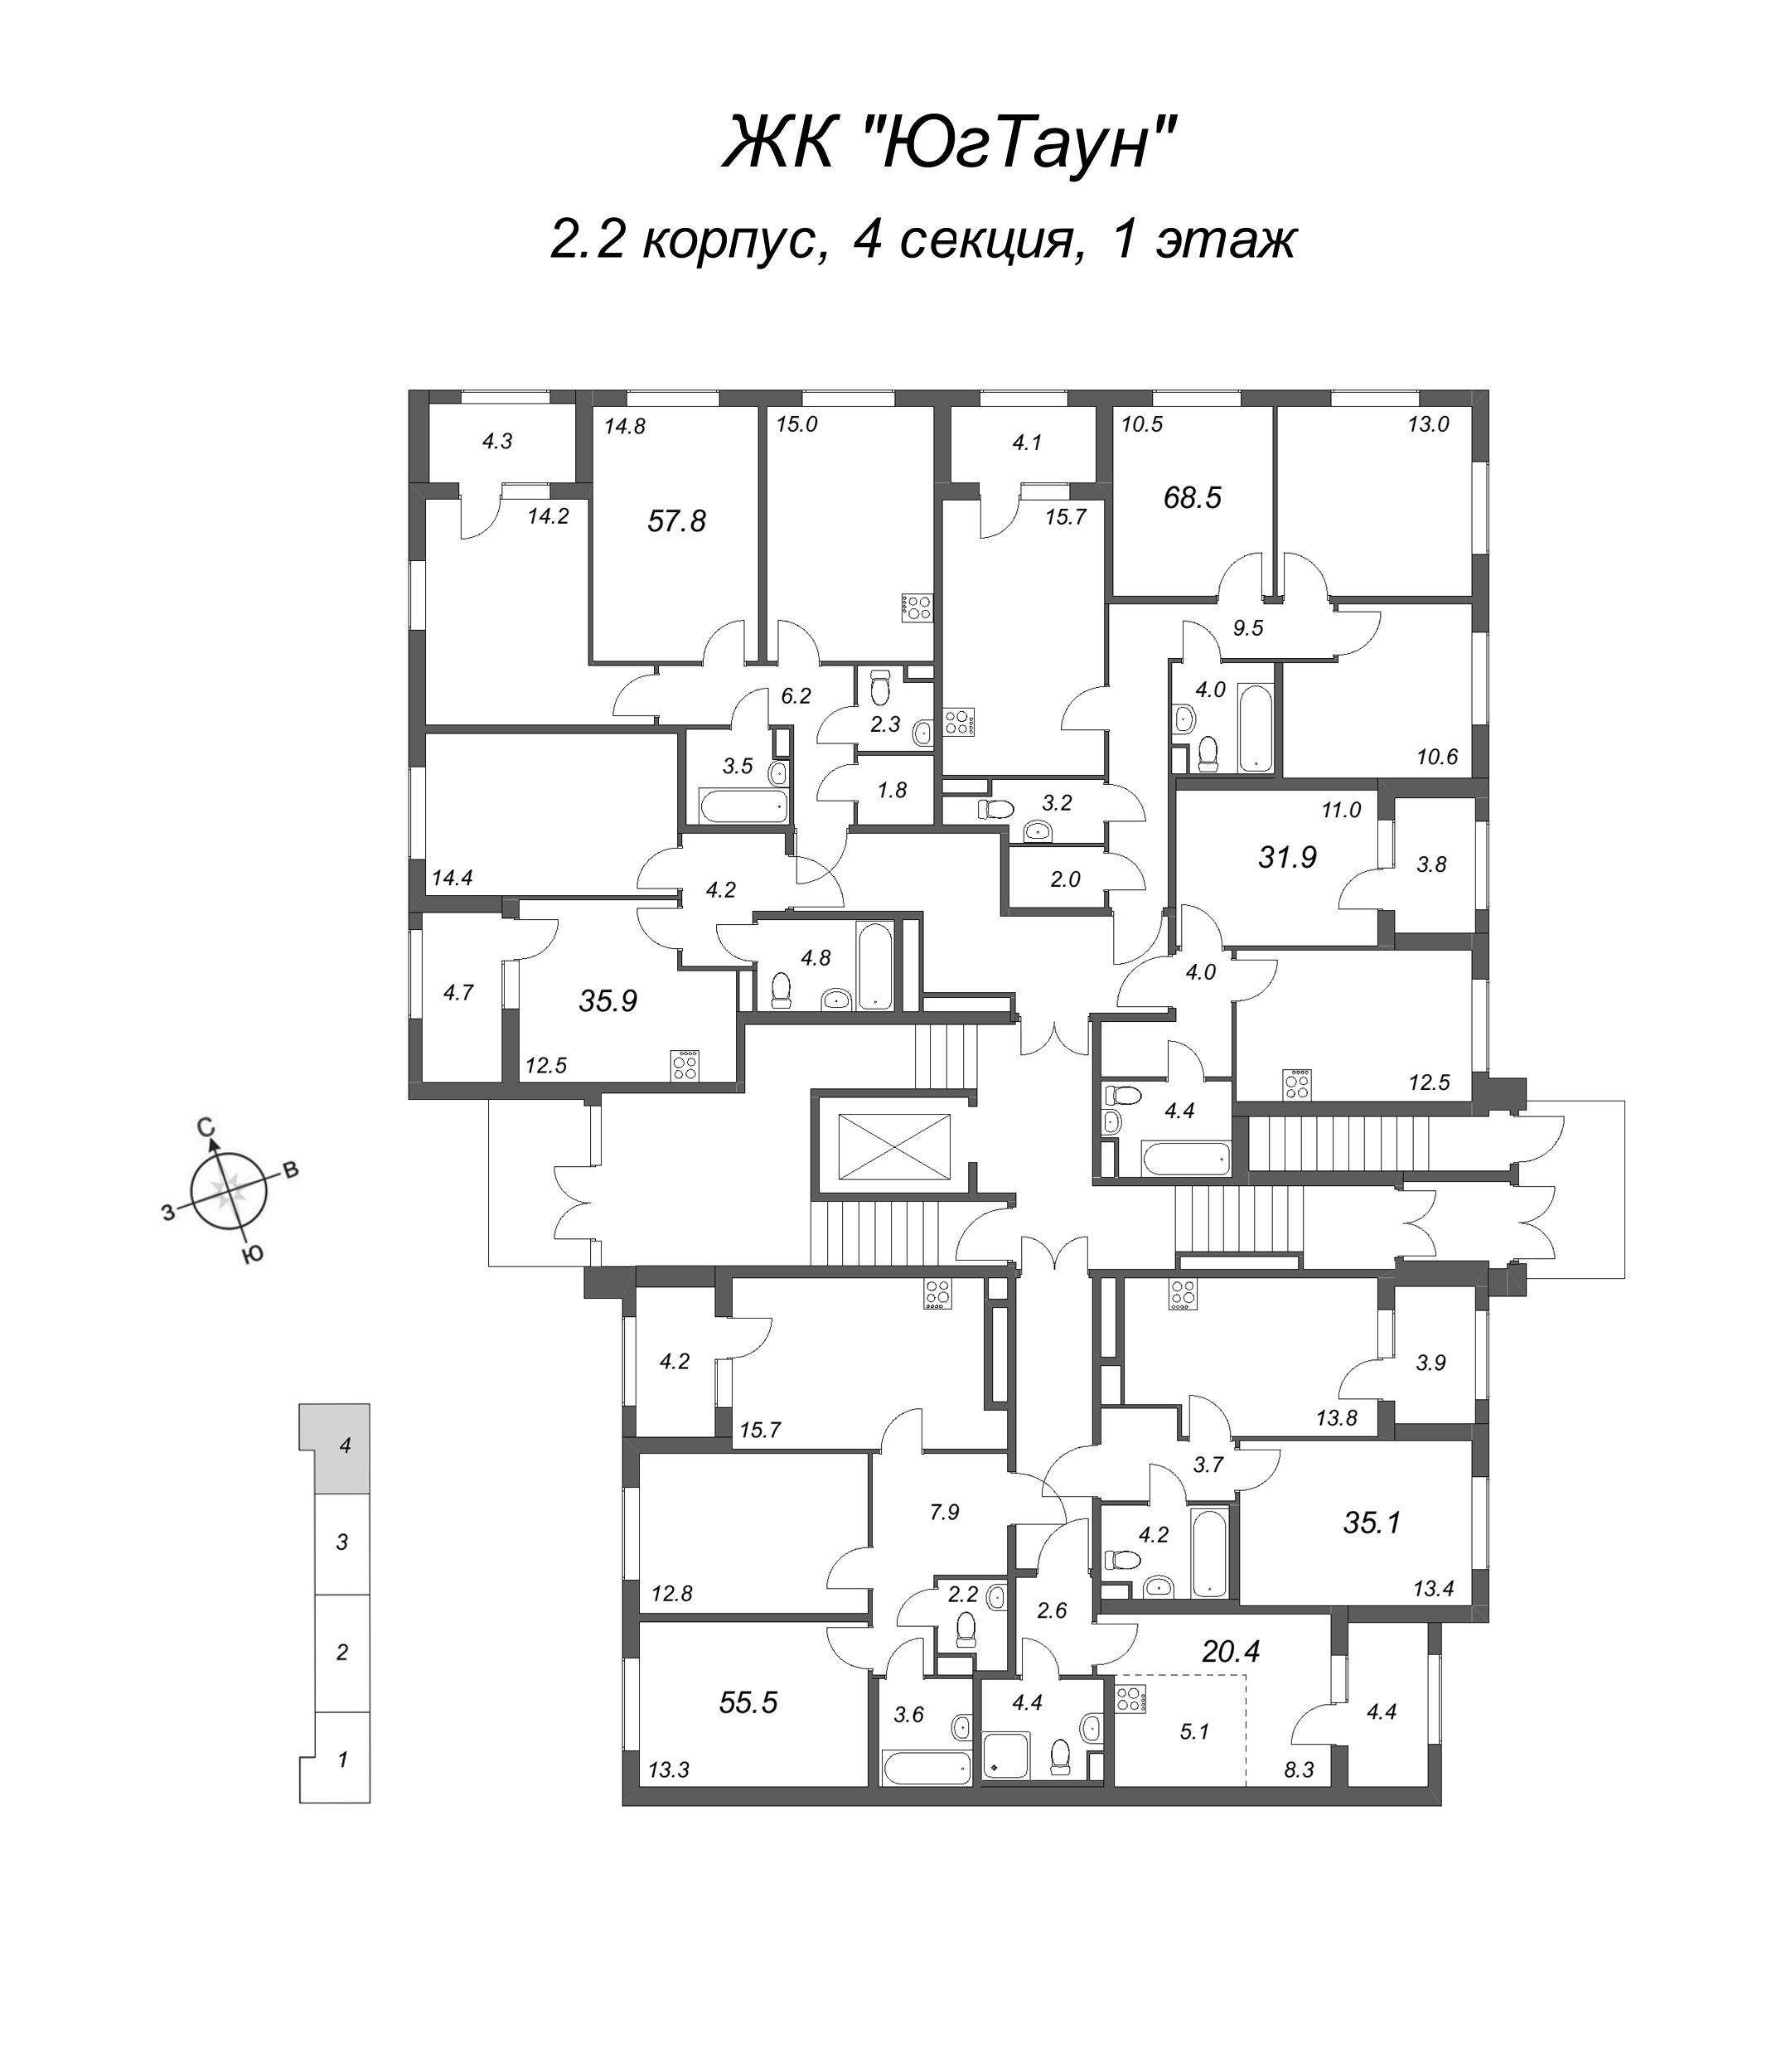 3-комнатная (Евро) квартира, 55.5 м² - планировка этажа